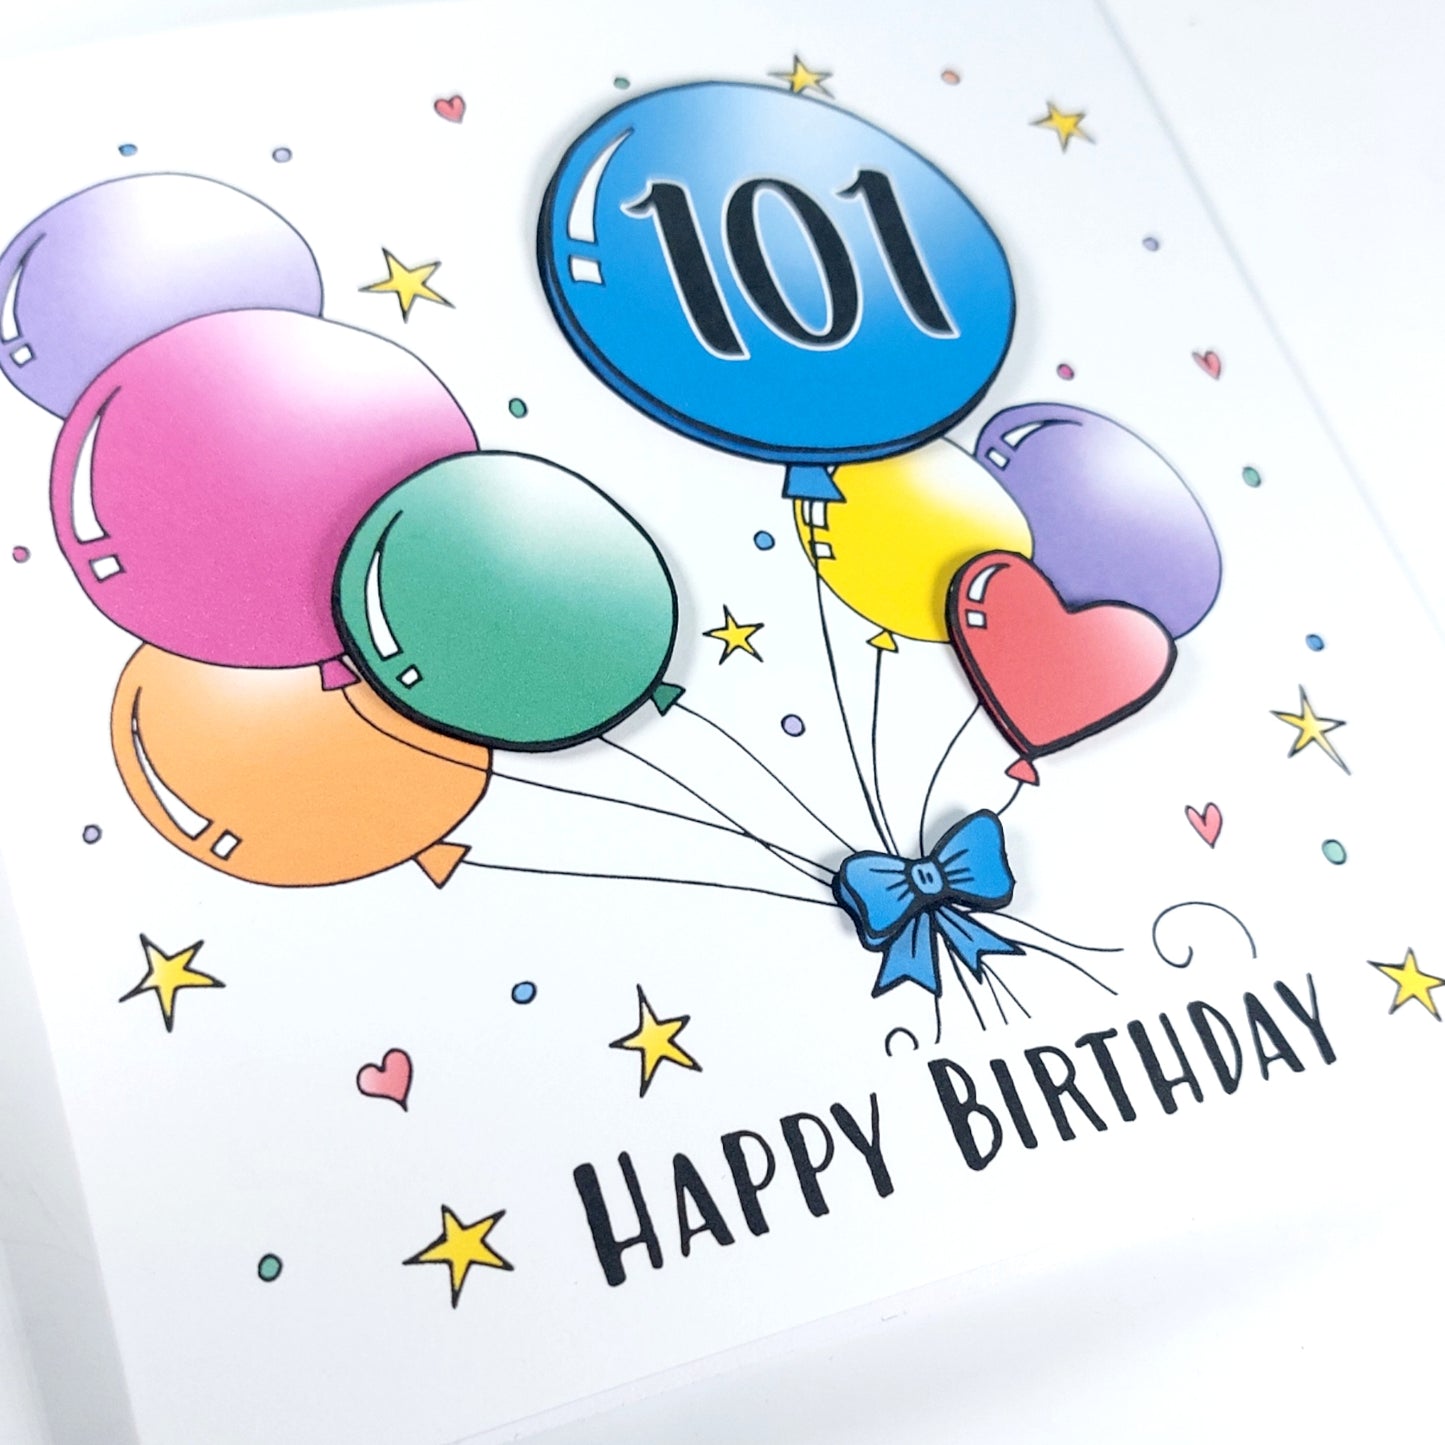 101st Balloons Birthday Card